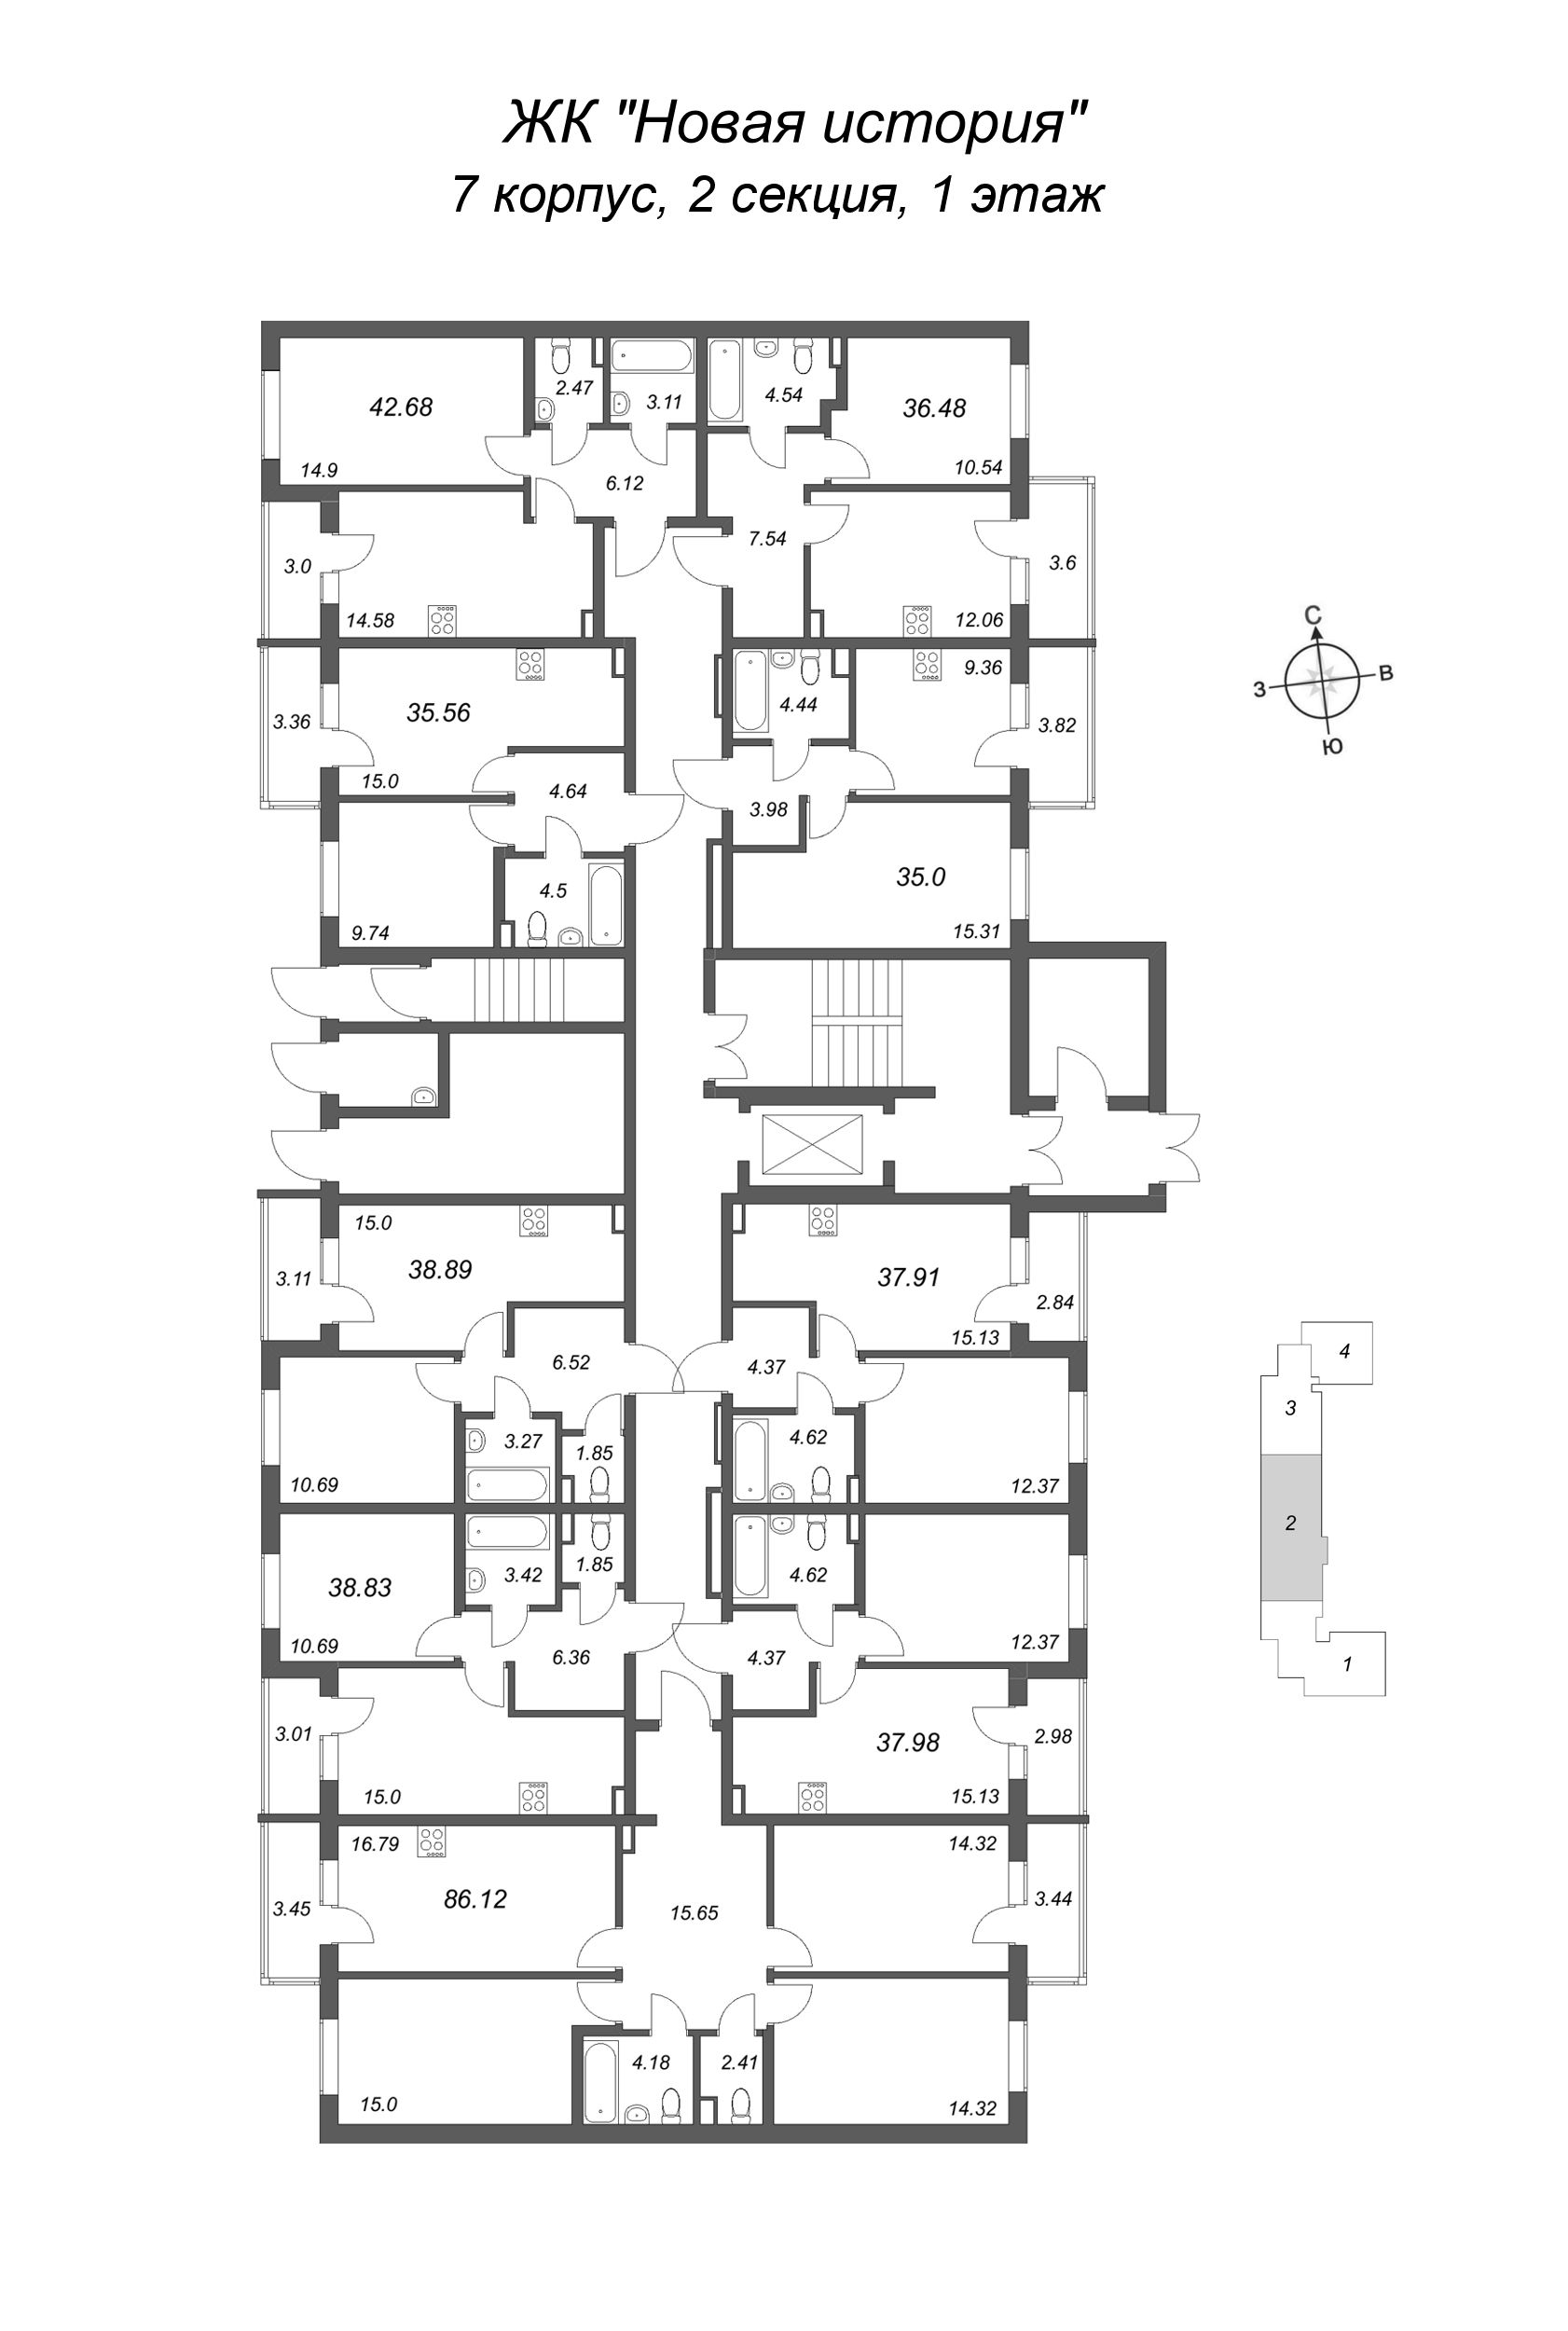 2-комнатная (Евро) квартира, 37.98 м² - планировка этажа